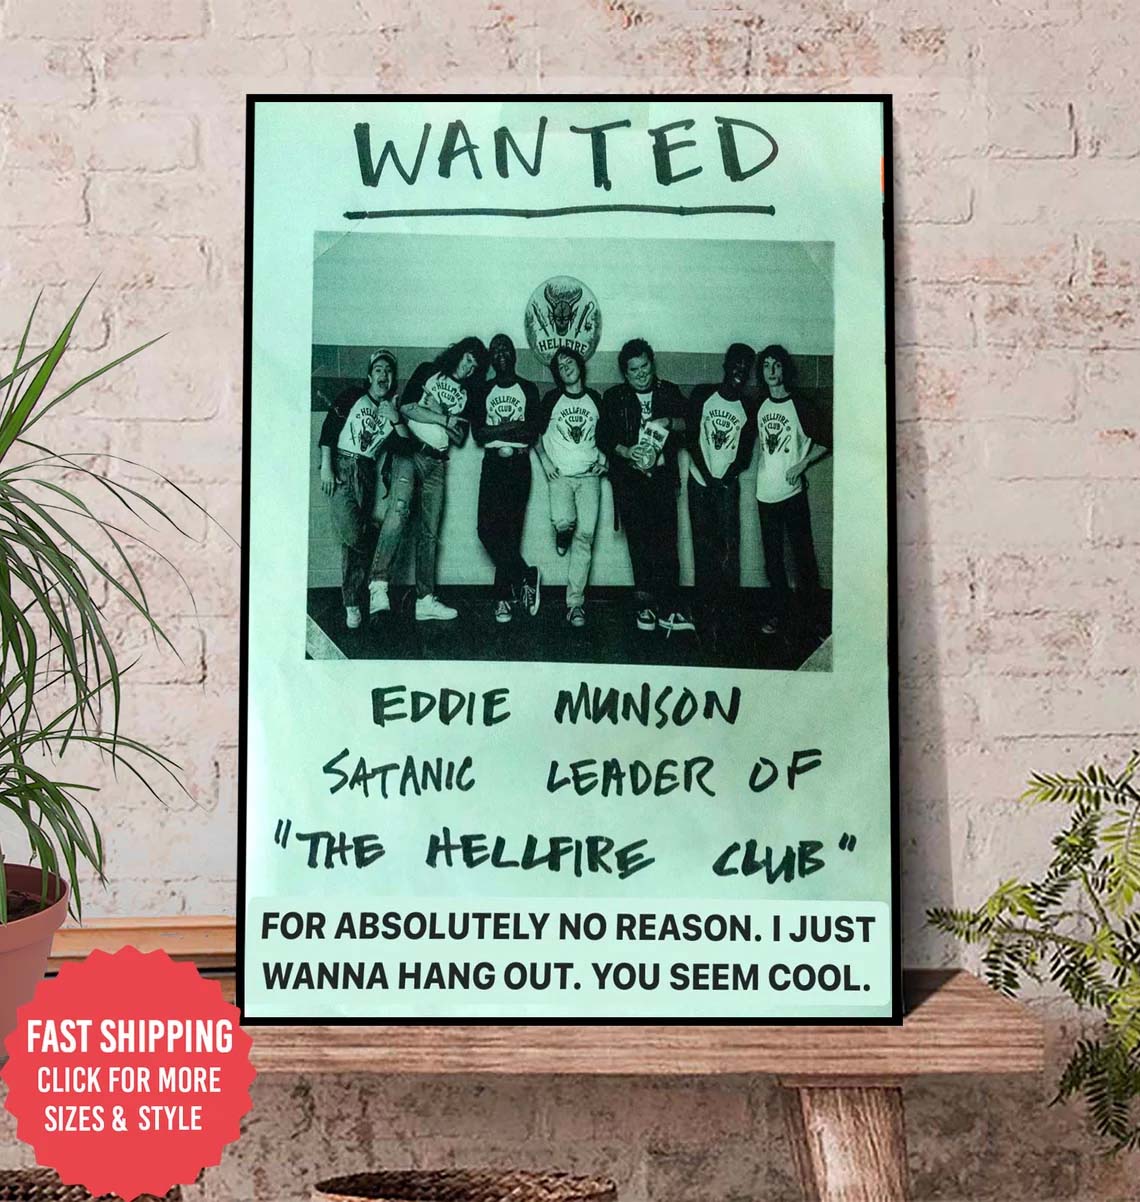 Wanted Eddie Muson Season 4 Poster